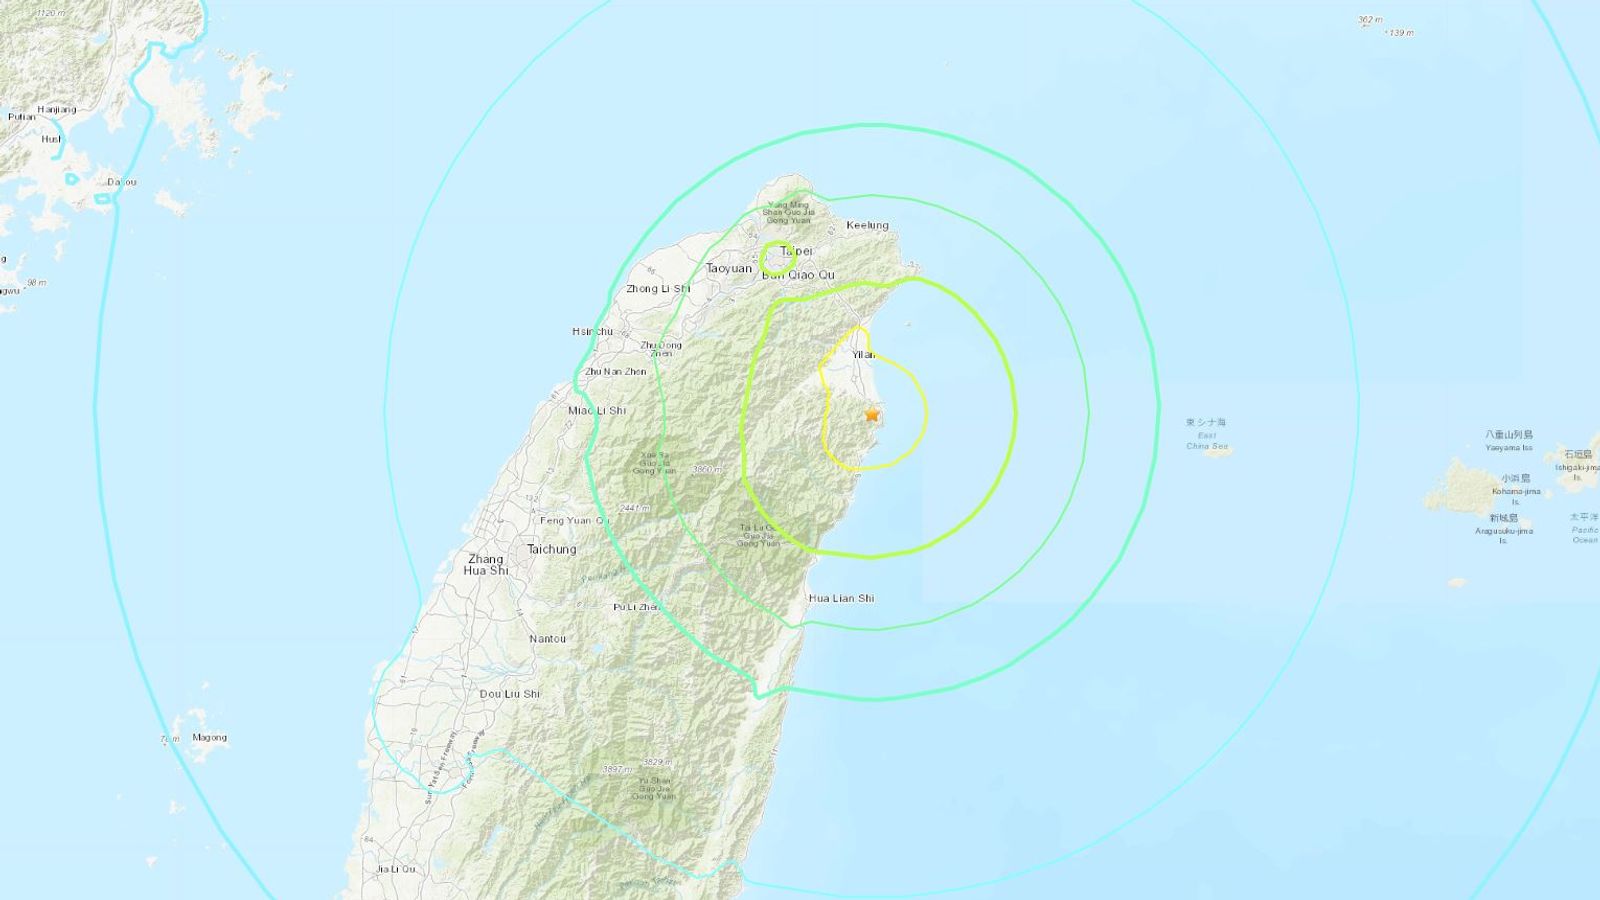 Taiwan: Earthquake of magnitude 6.5 strikes island